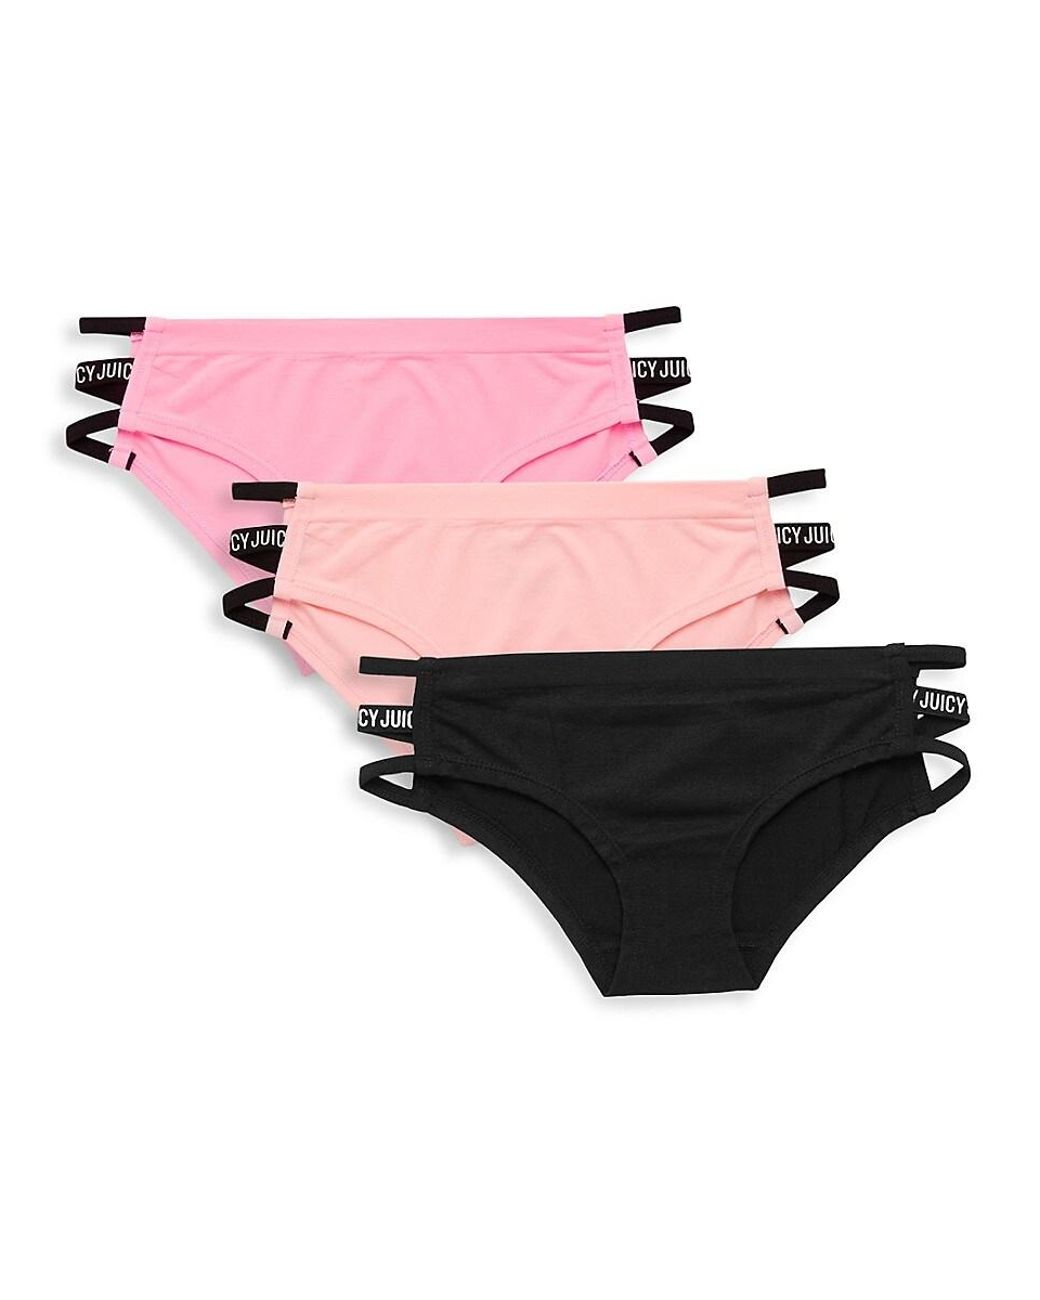 Buy Victoria's Secret Stretch Cotton Bikini Panty online in Dubai